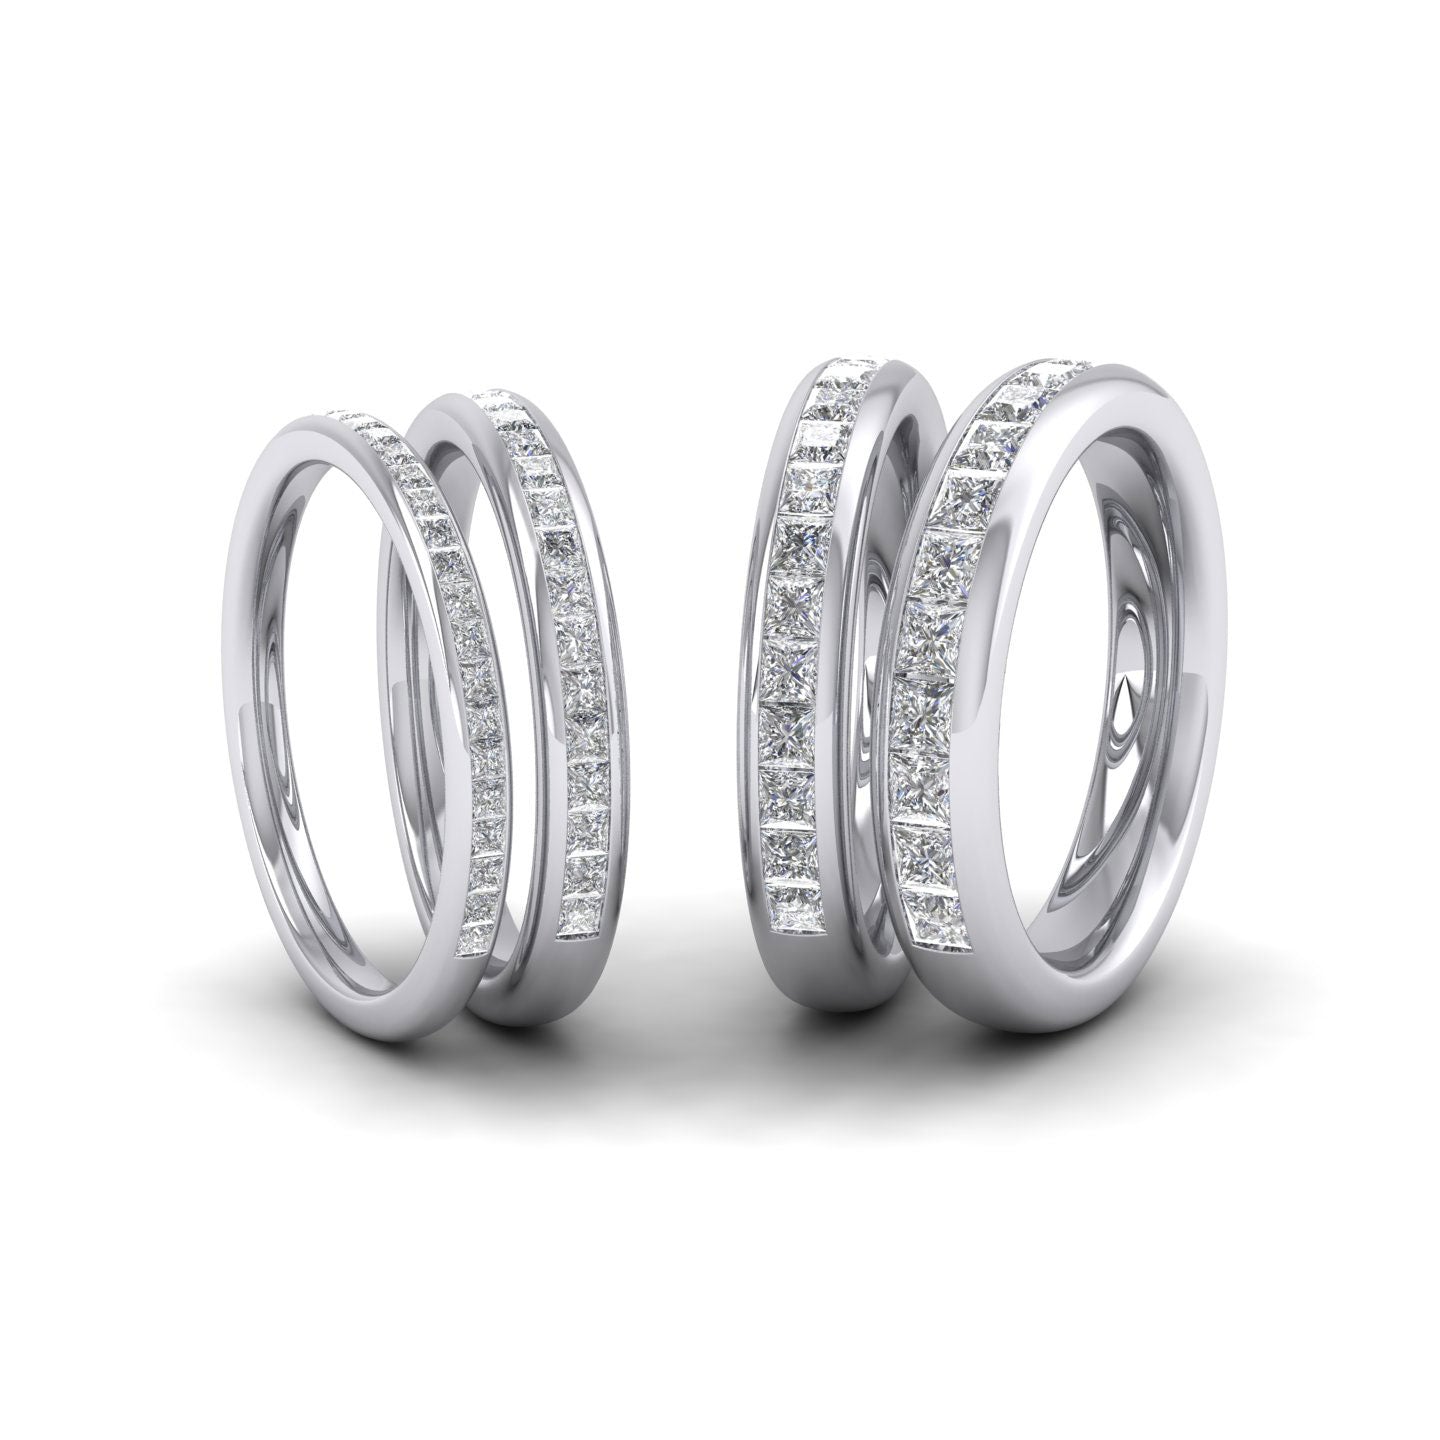 Princess Cut Diamond 1.05ct Half Channel Set Wedding Ring In 950 Platinum 4mm Wide